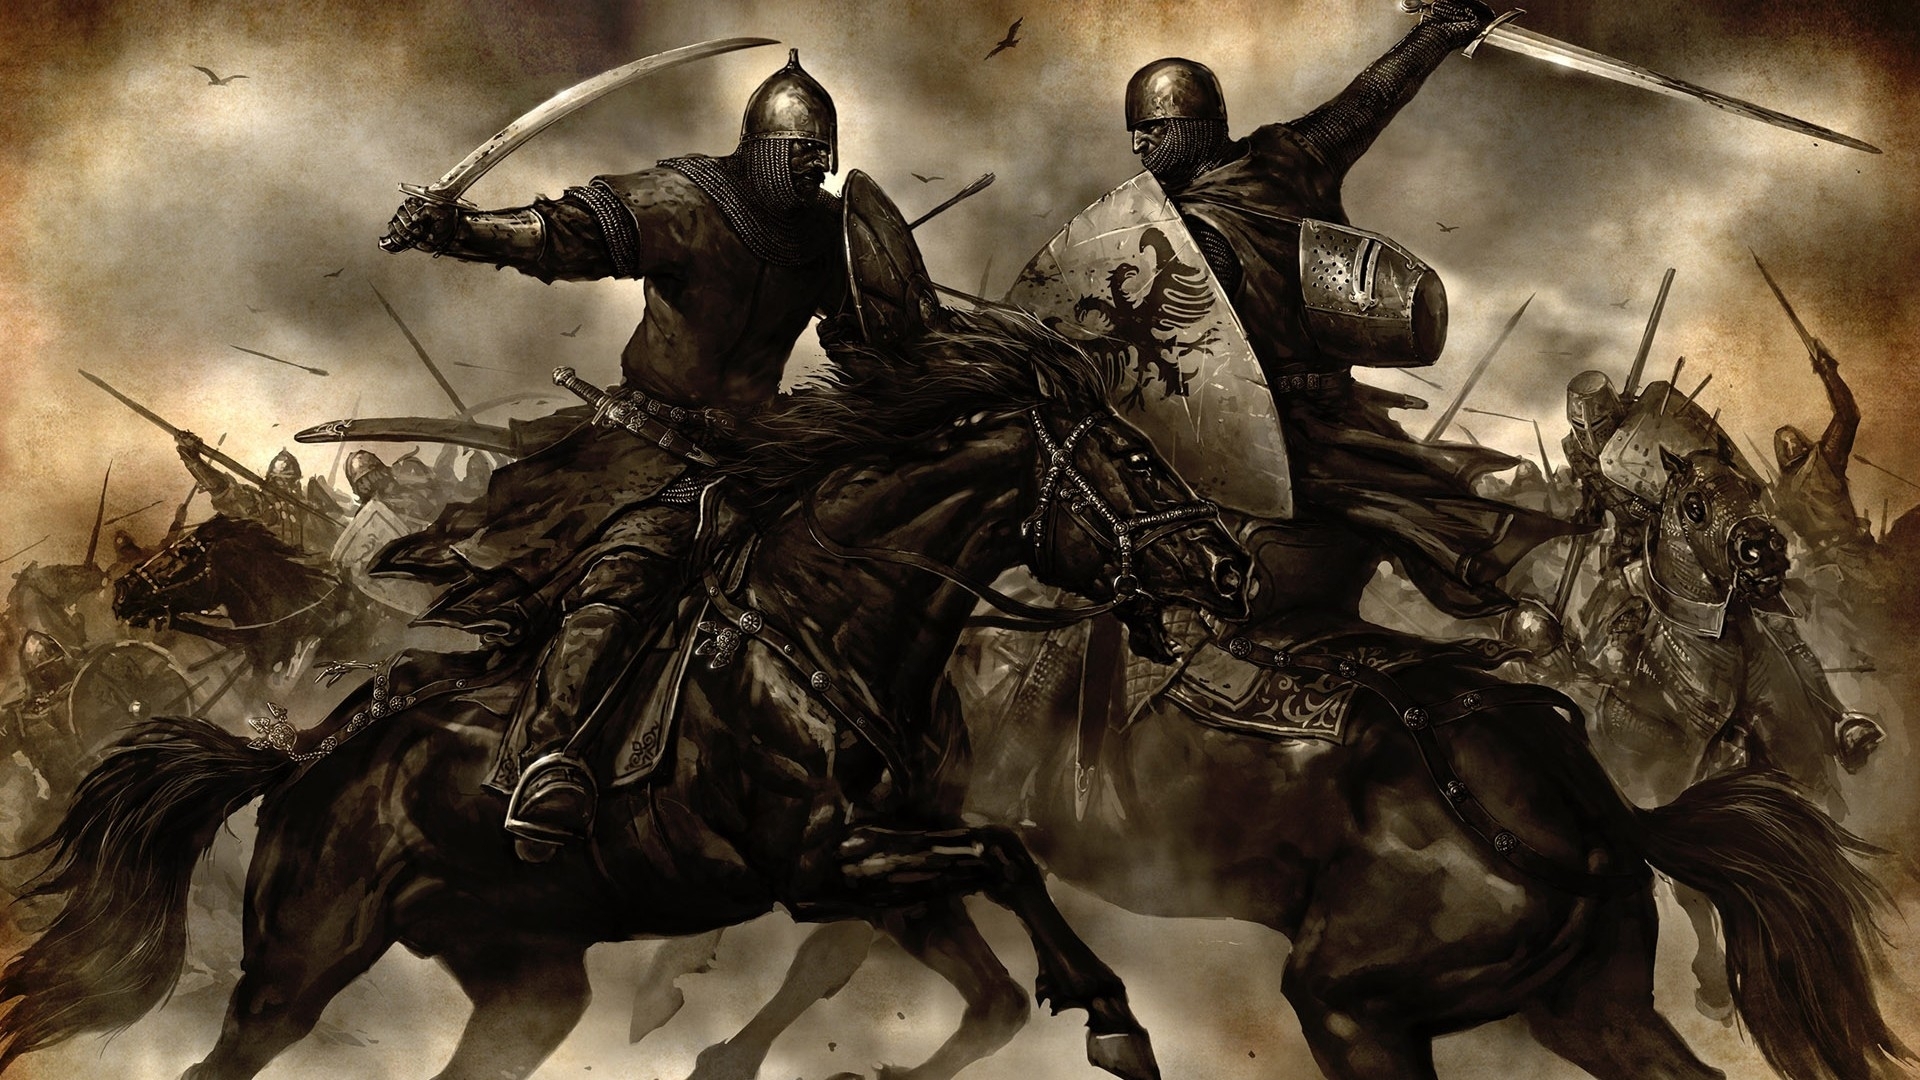  knight horse weapons sword wallpaper 1920x1080 33306 WallpaperUP